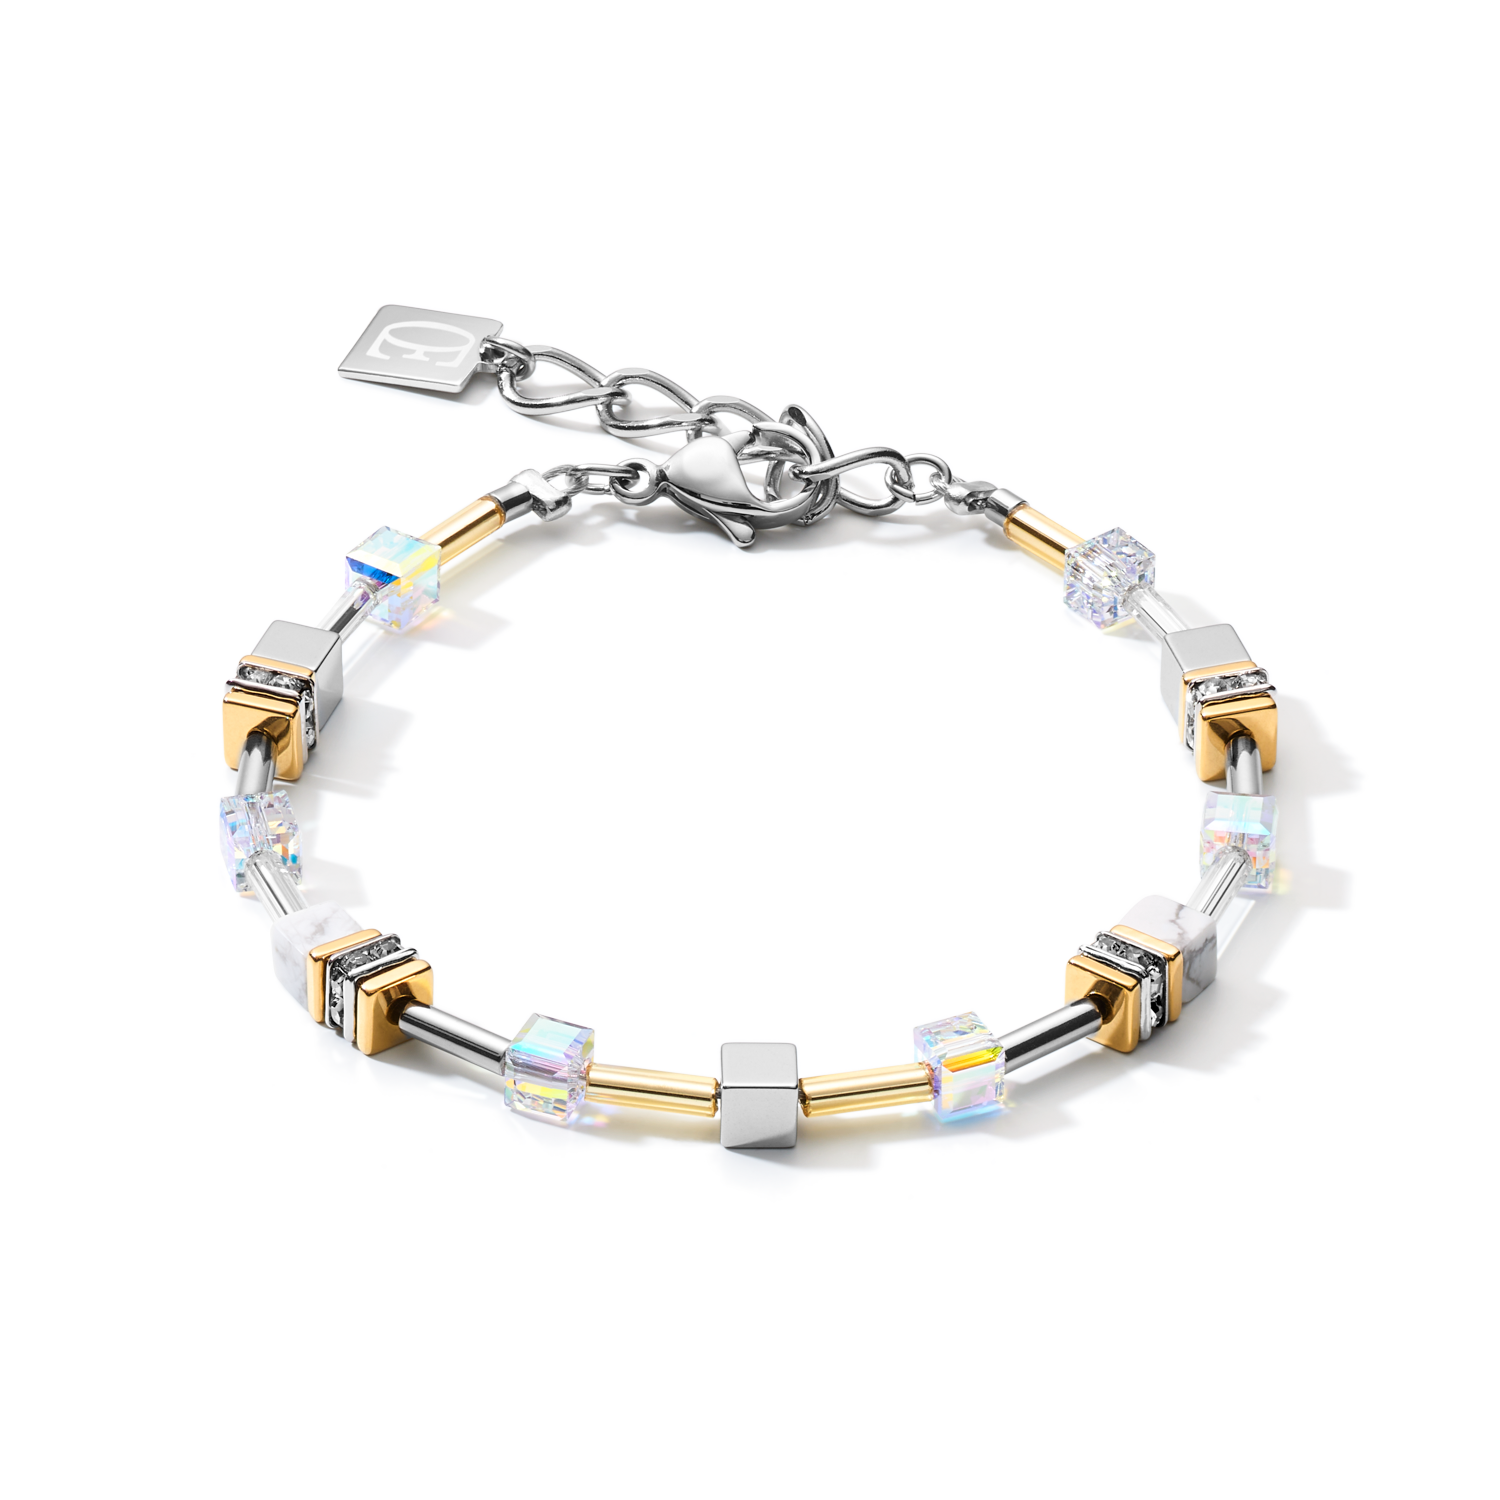 Bracelet GeoCUBE® Multitask 4-in-1 gold-silver